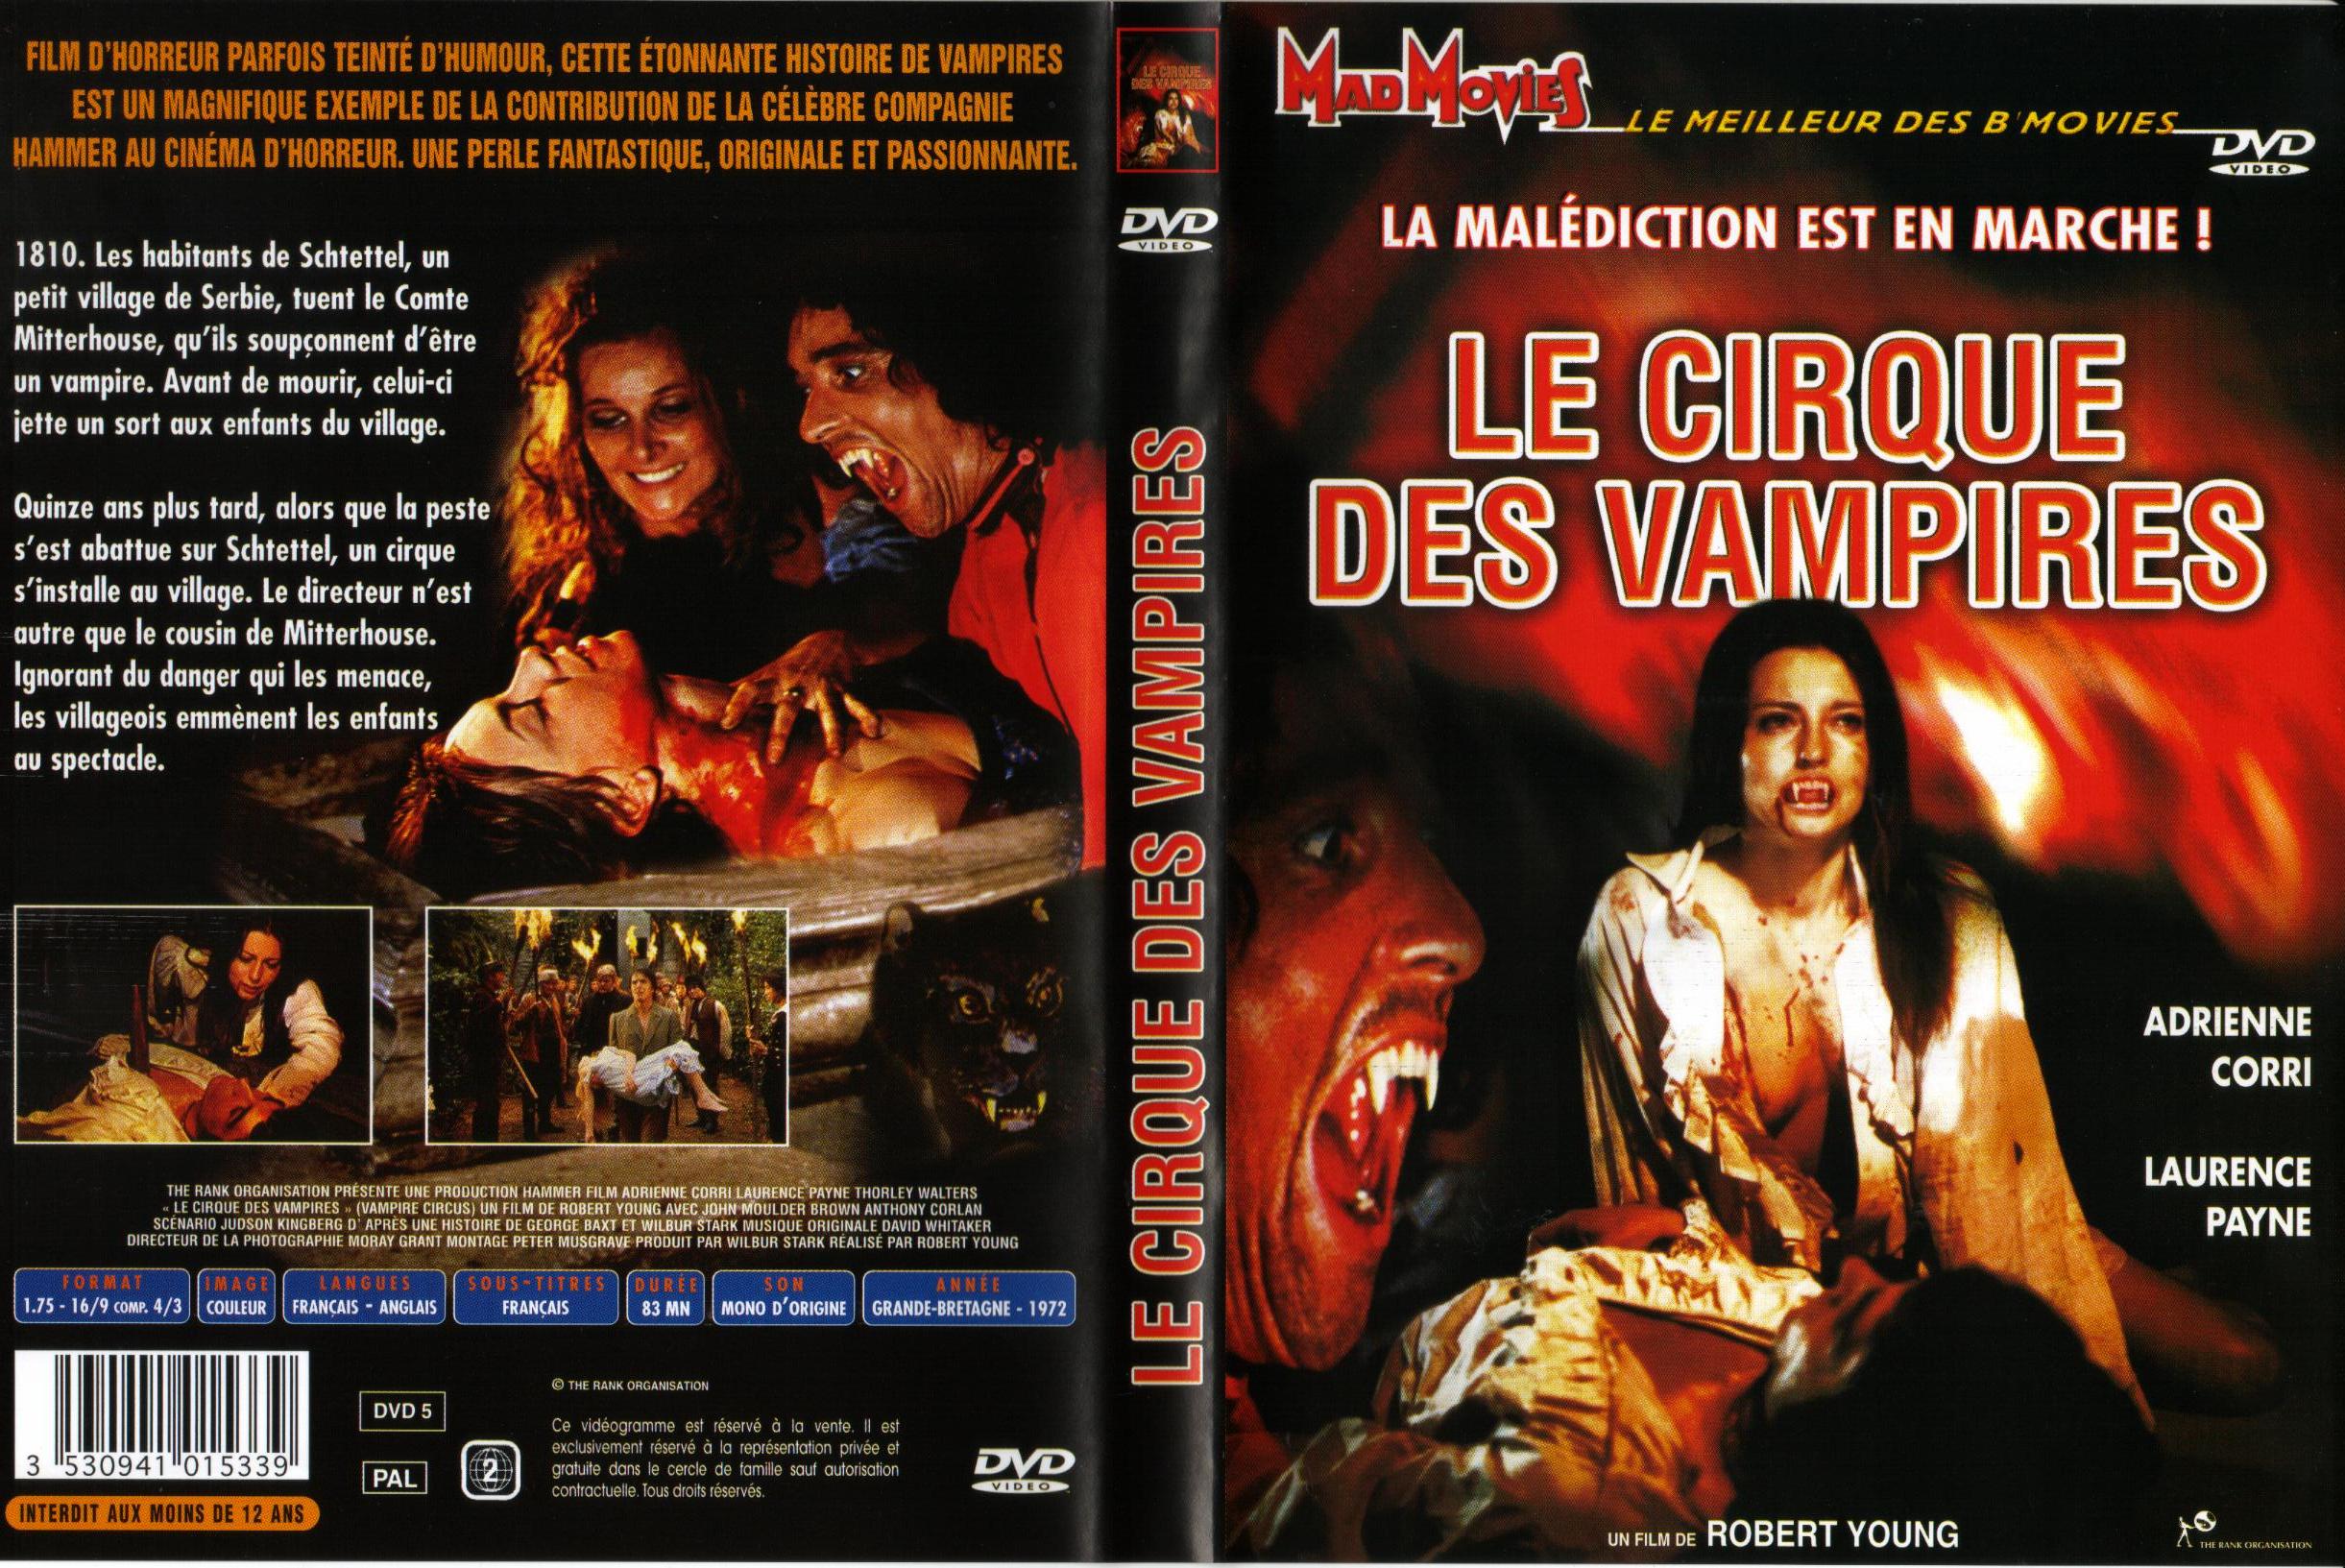 Jaquette DVD Le cirque des vampires